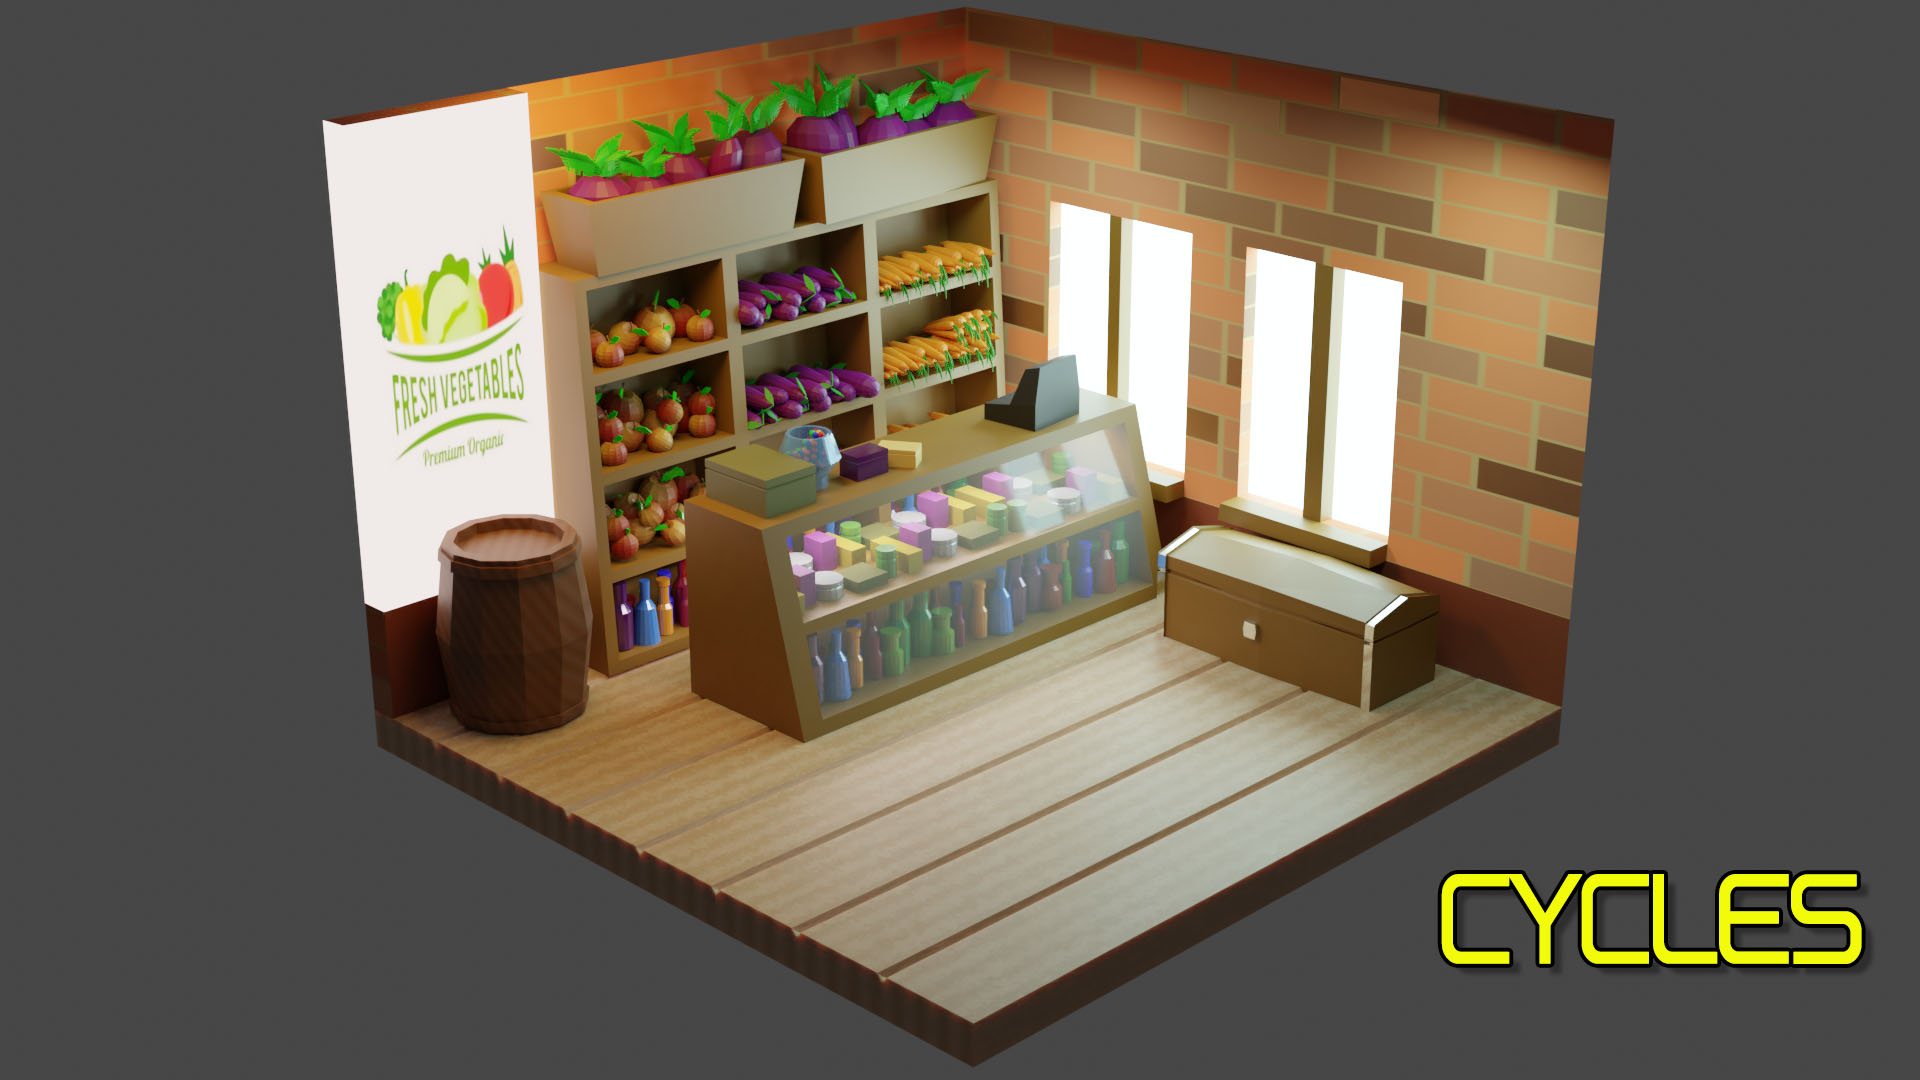 Vegets Shop. (Low-poly) in Blender cycles render image